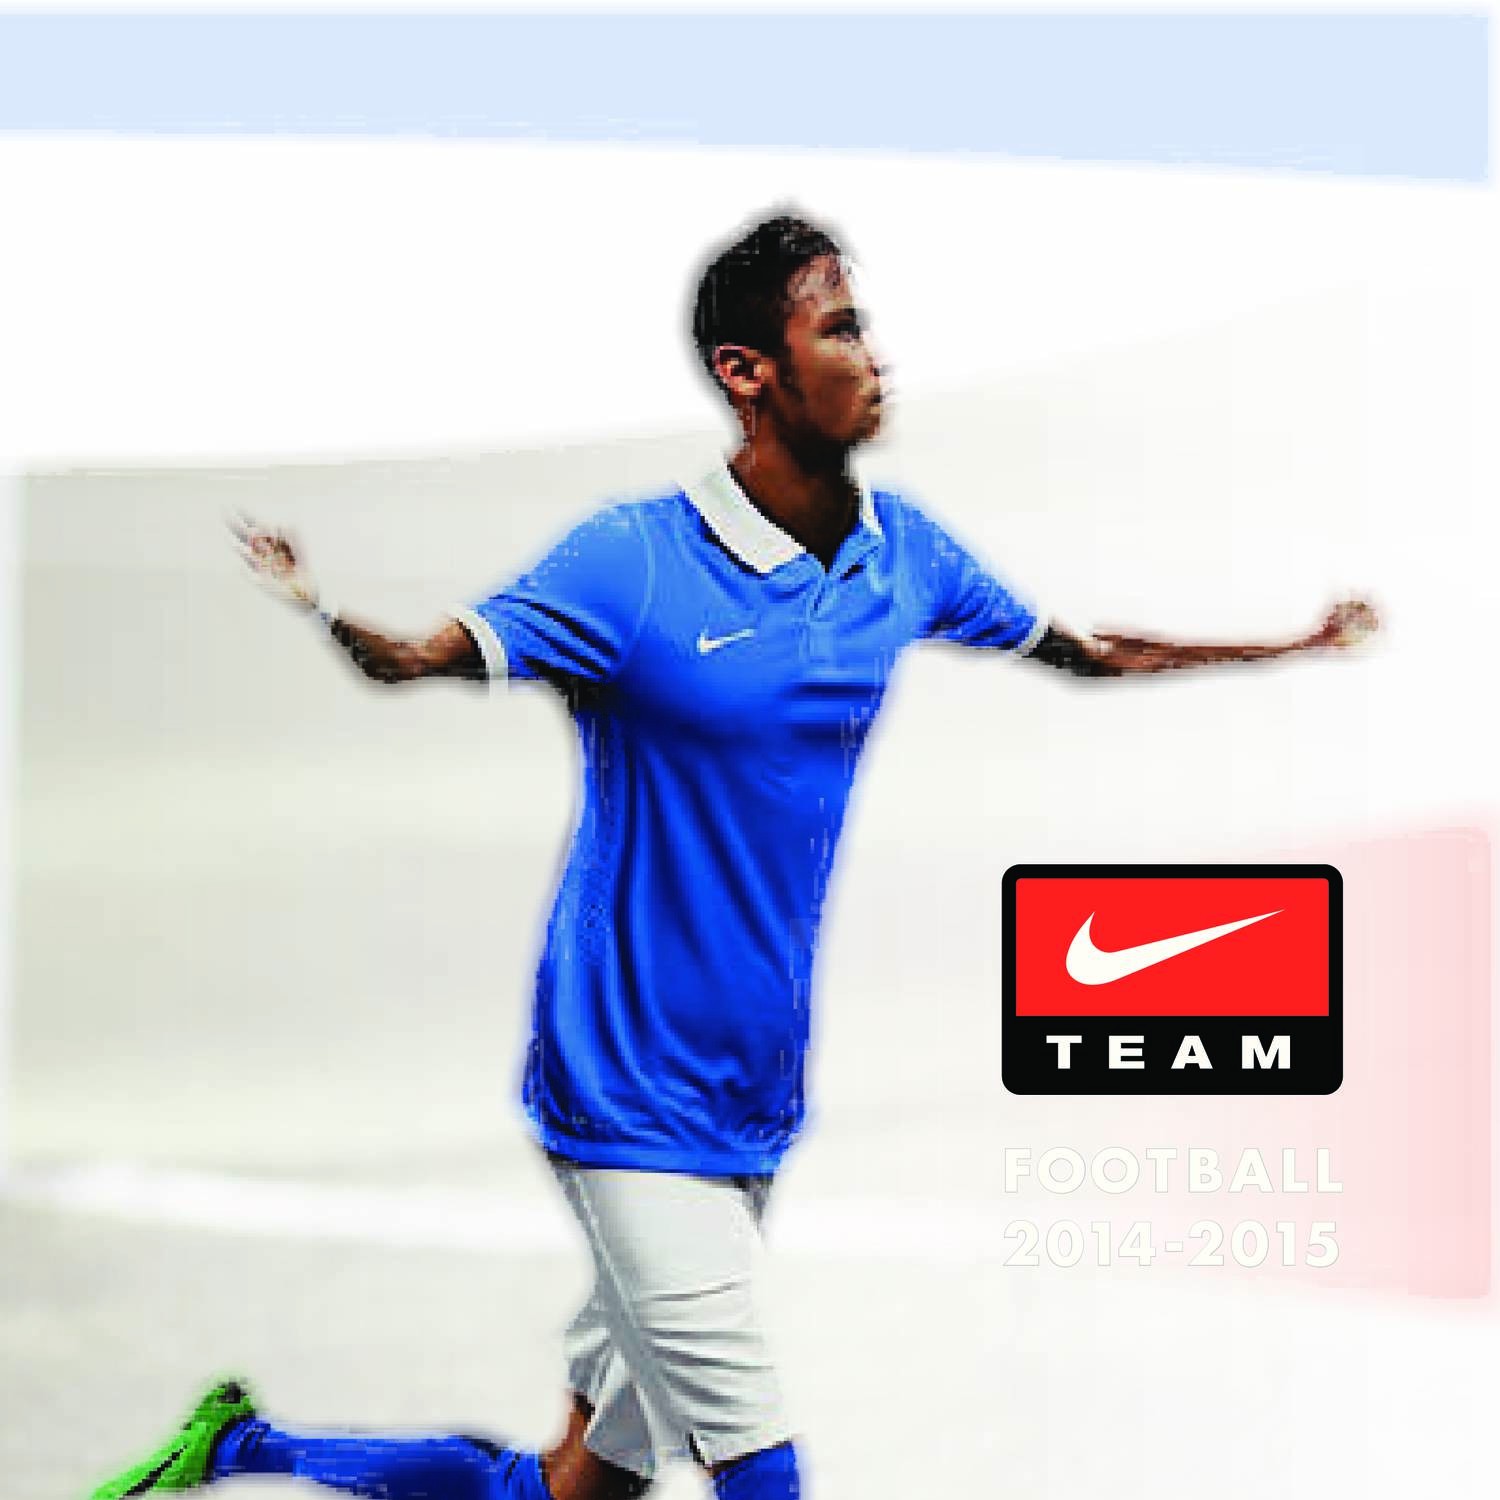 fiber prayer park Nike Teamwear 2014-2015.pdf | DocDroid